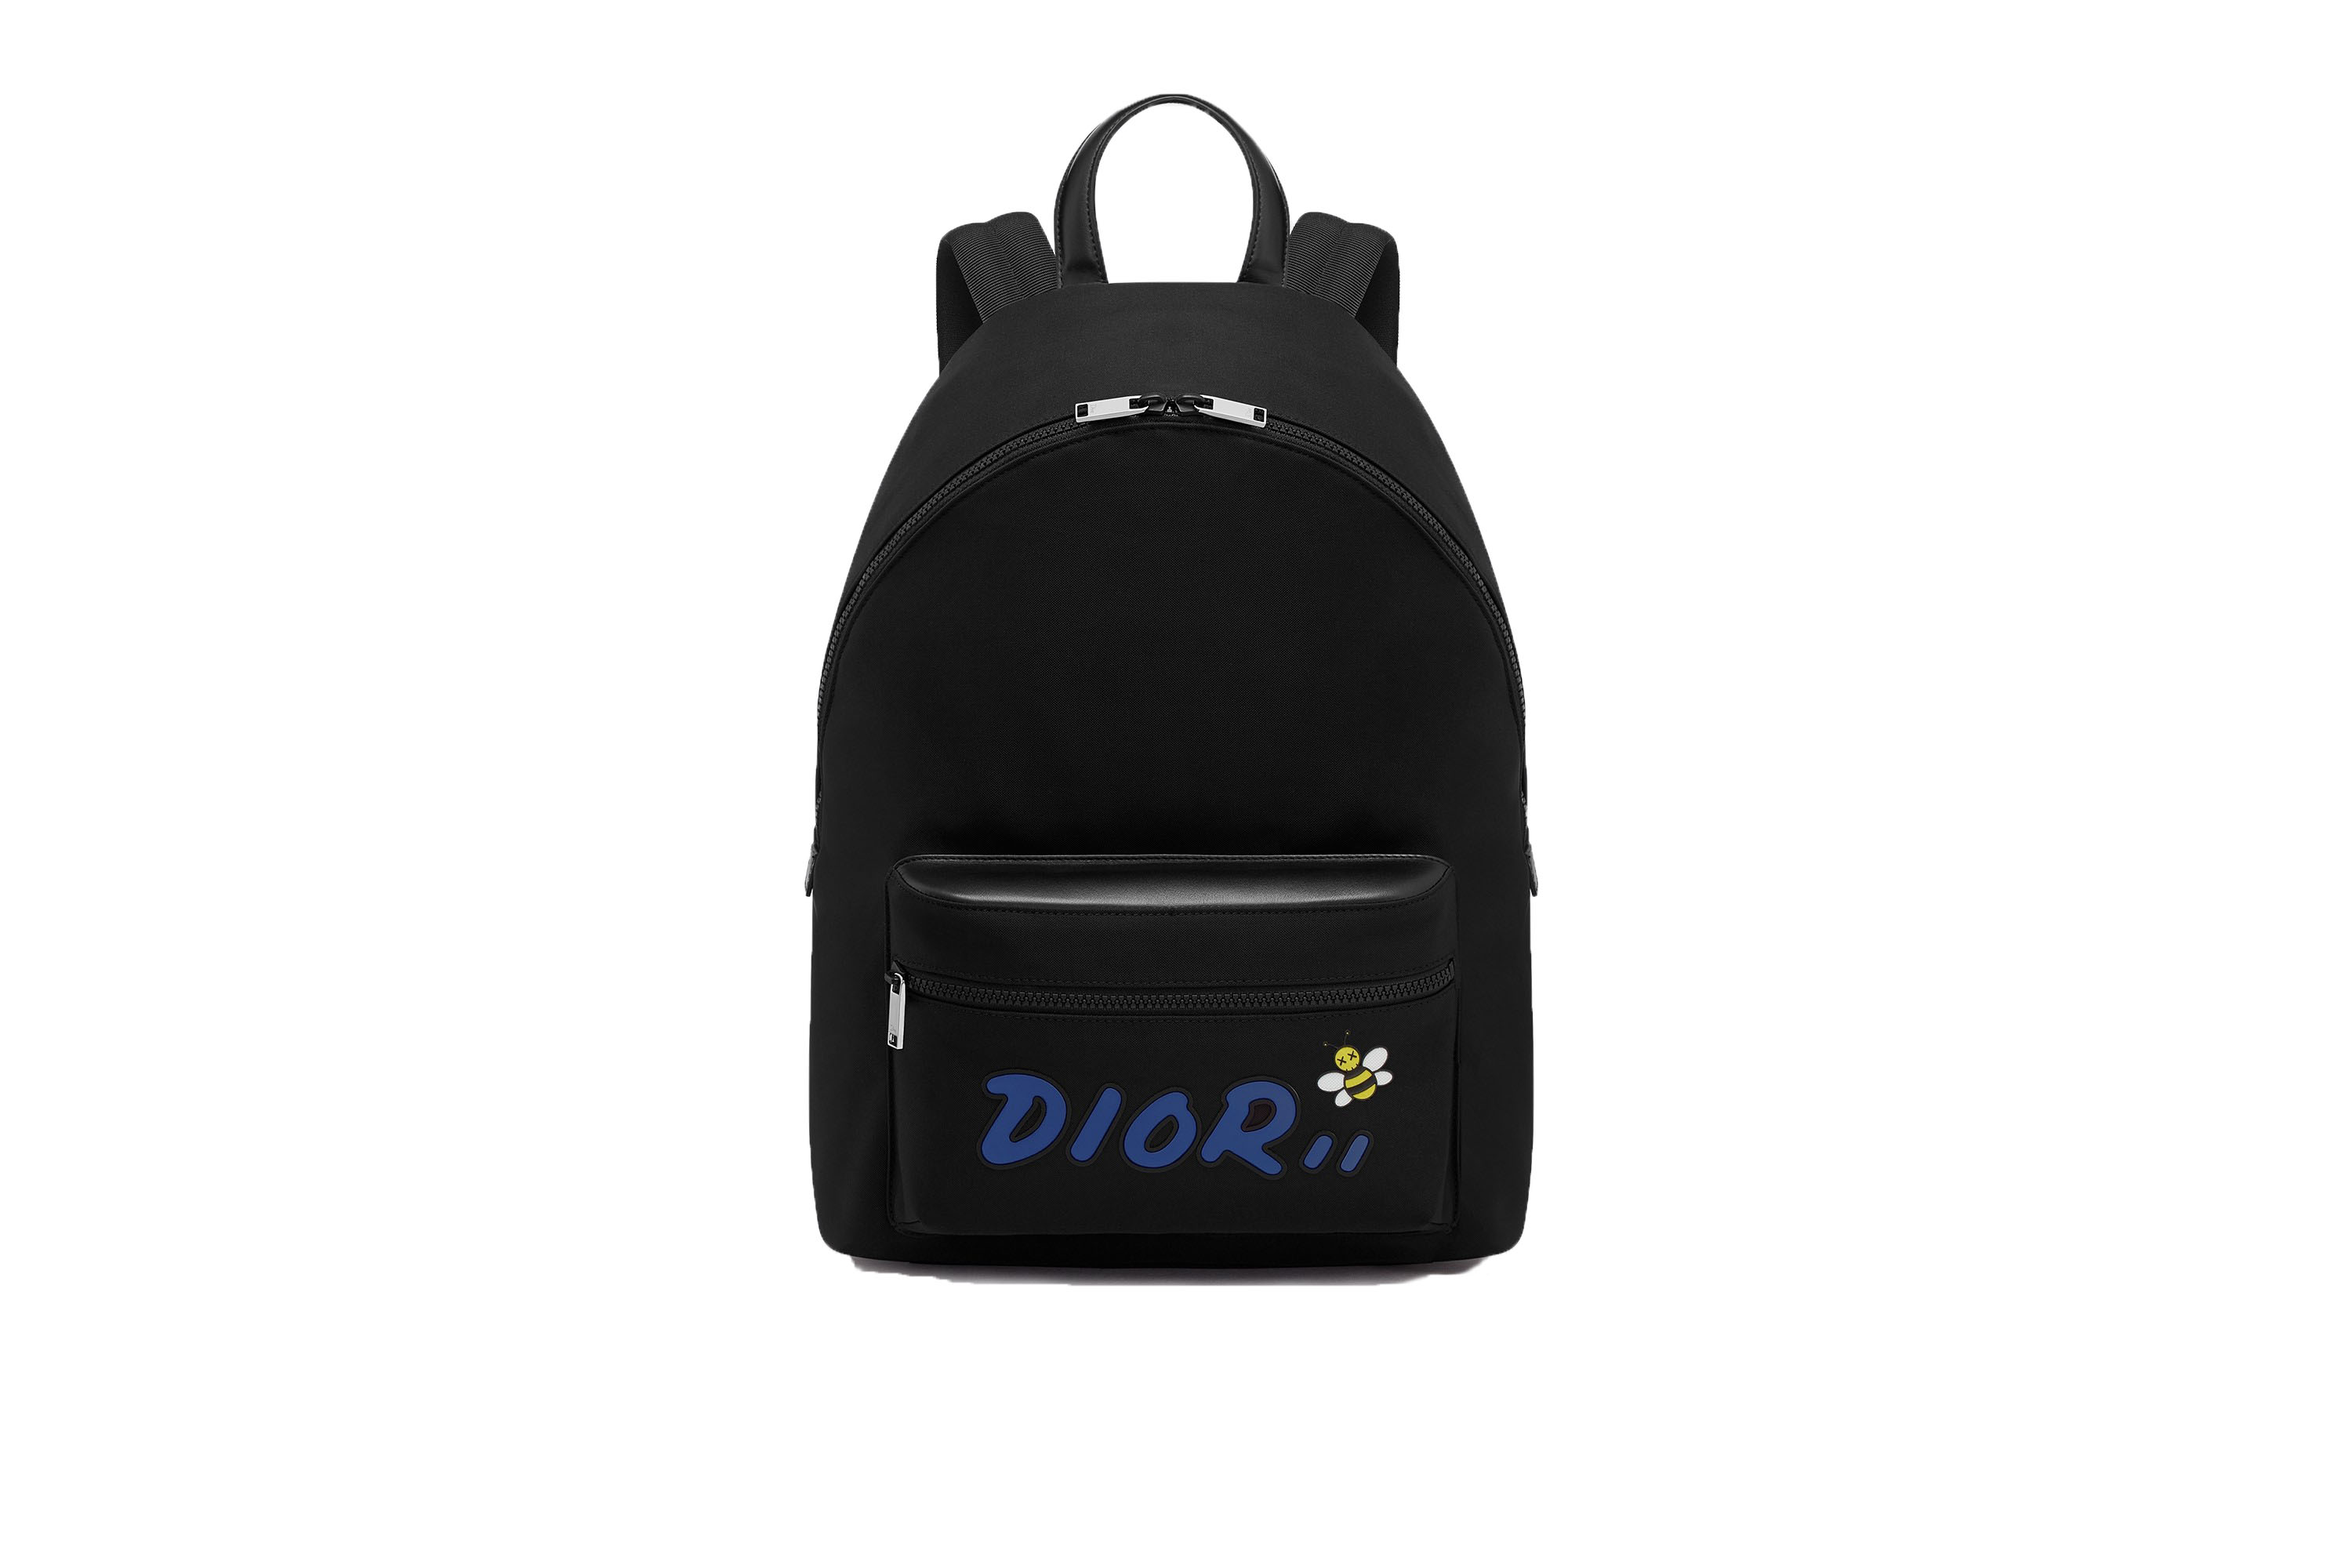 dior bee backpack